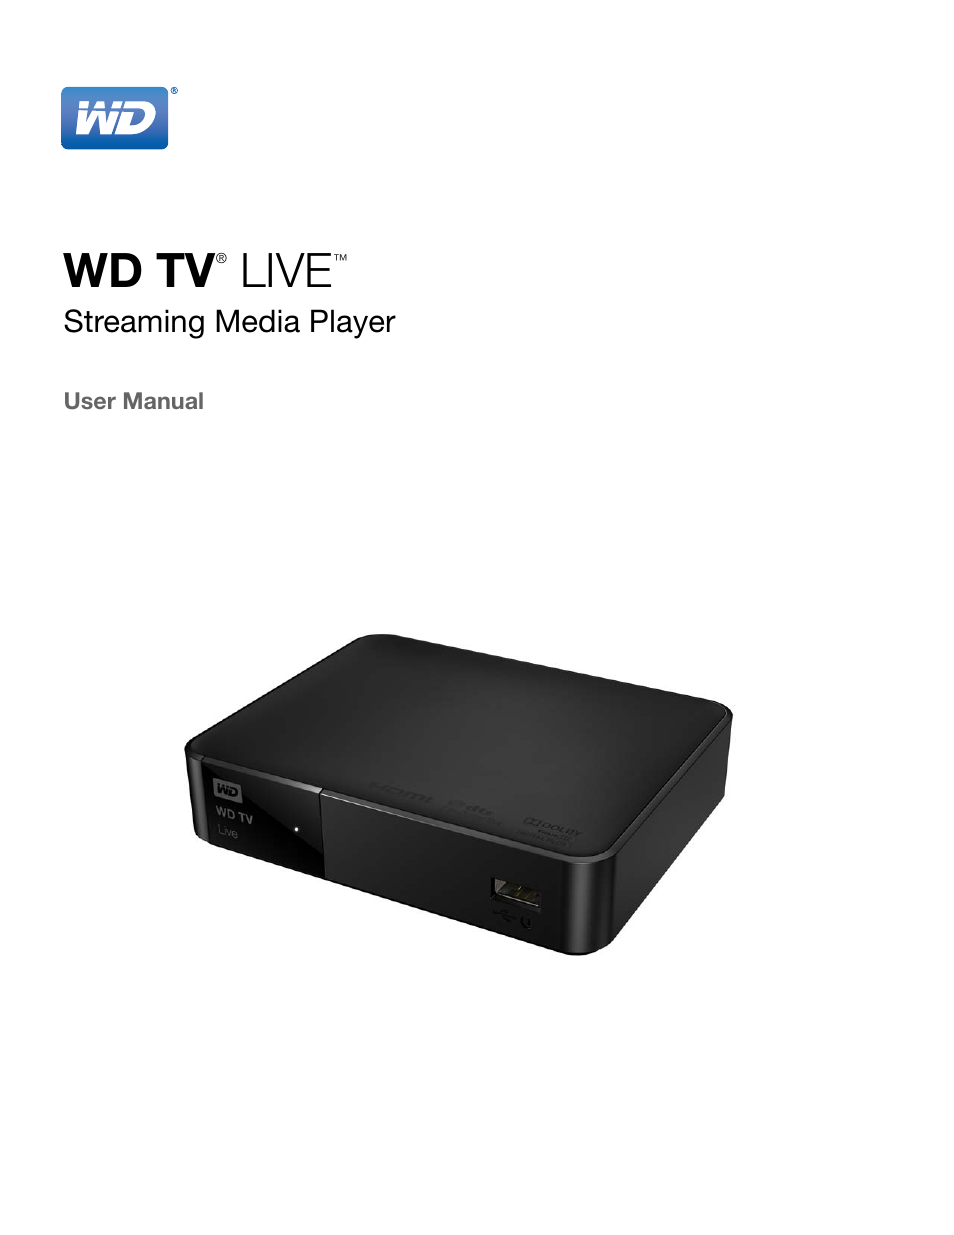 Western Digital WD TV Live Streaming Media Player (Gen 3) User Manual User Manual | 237 pages